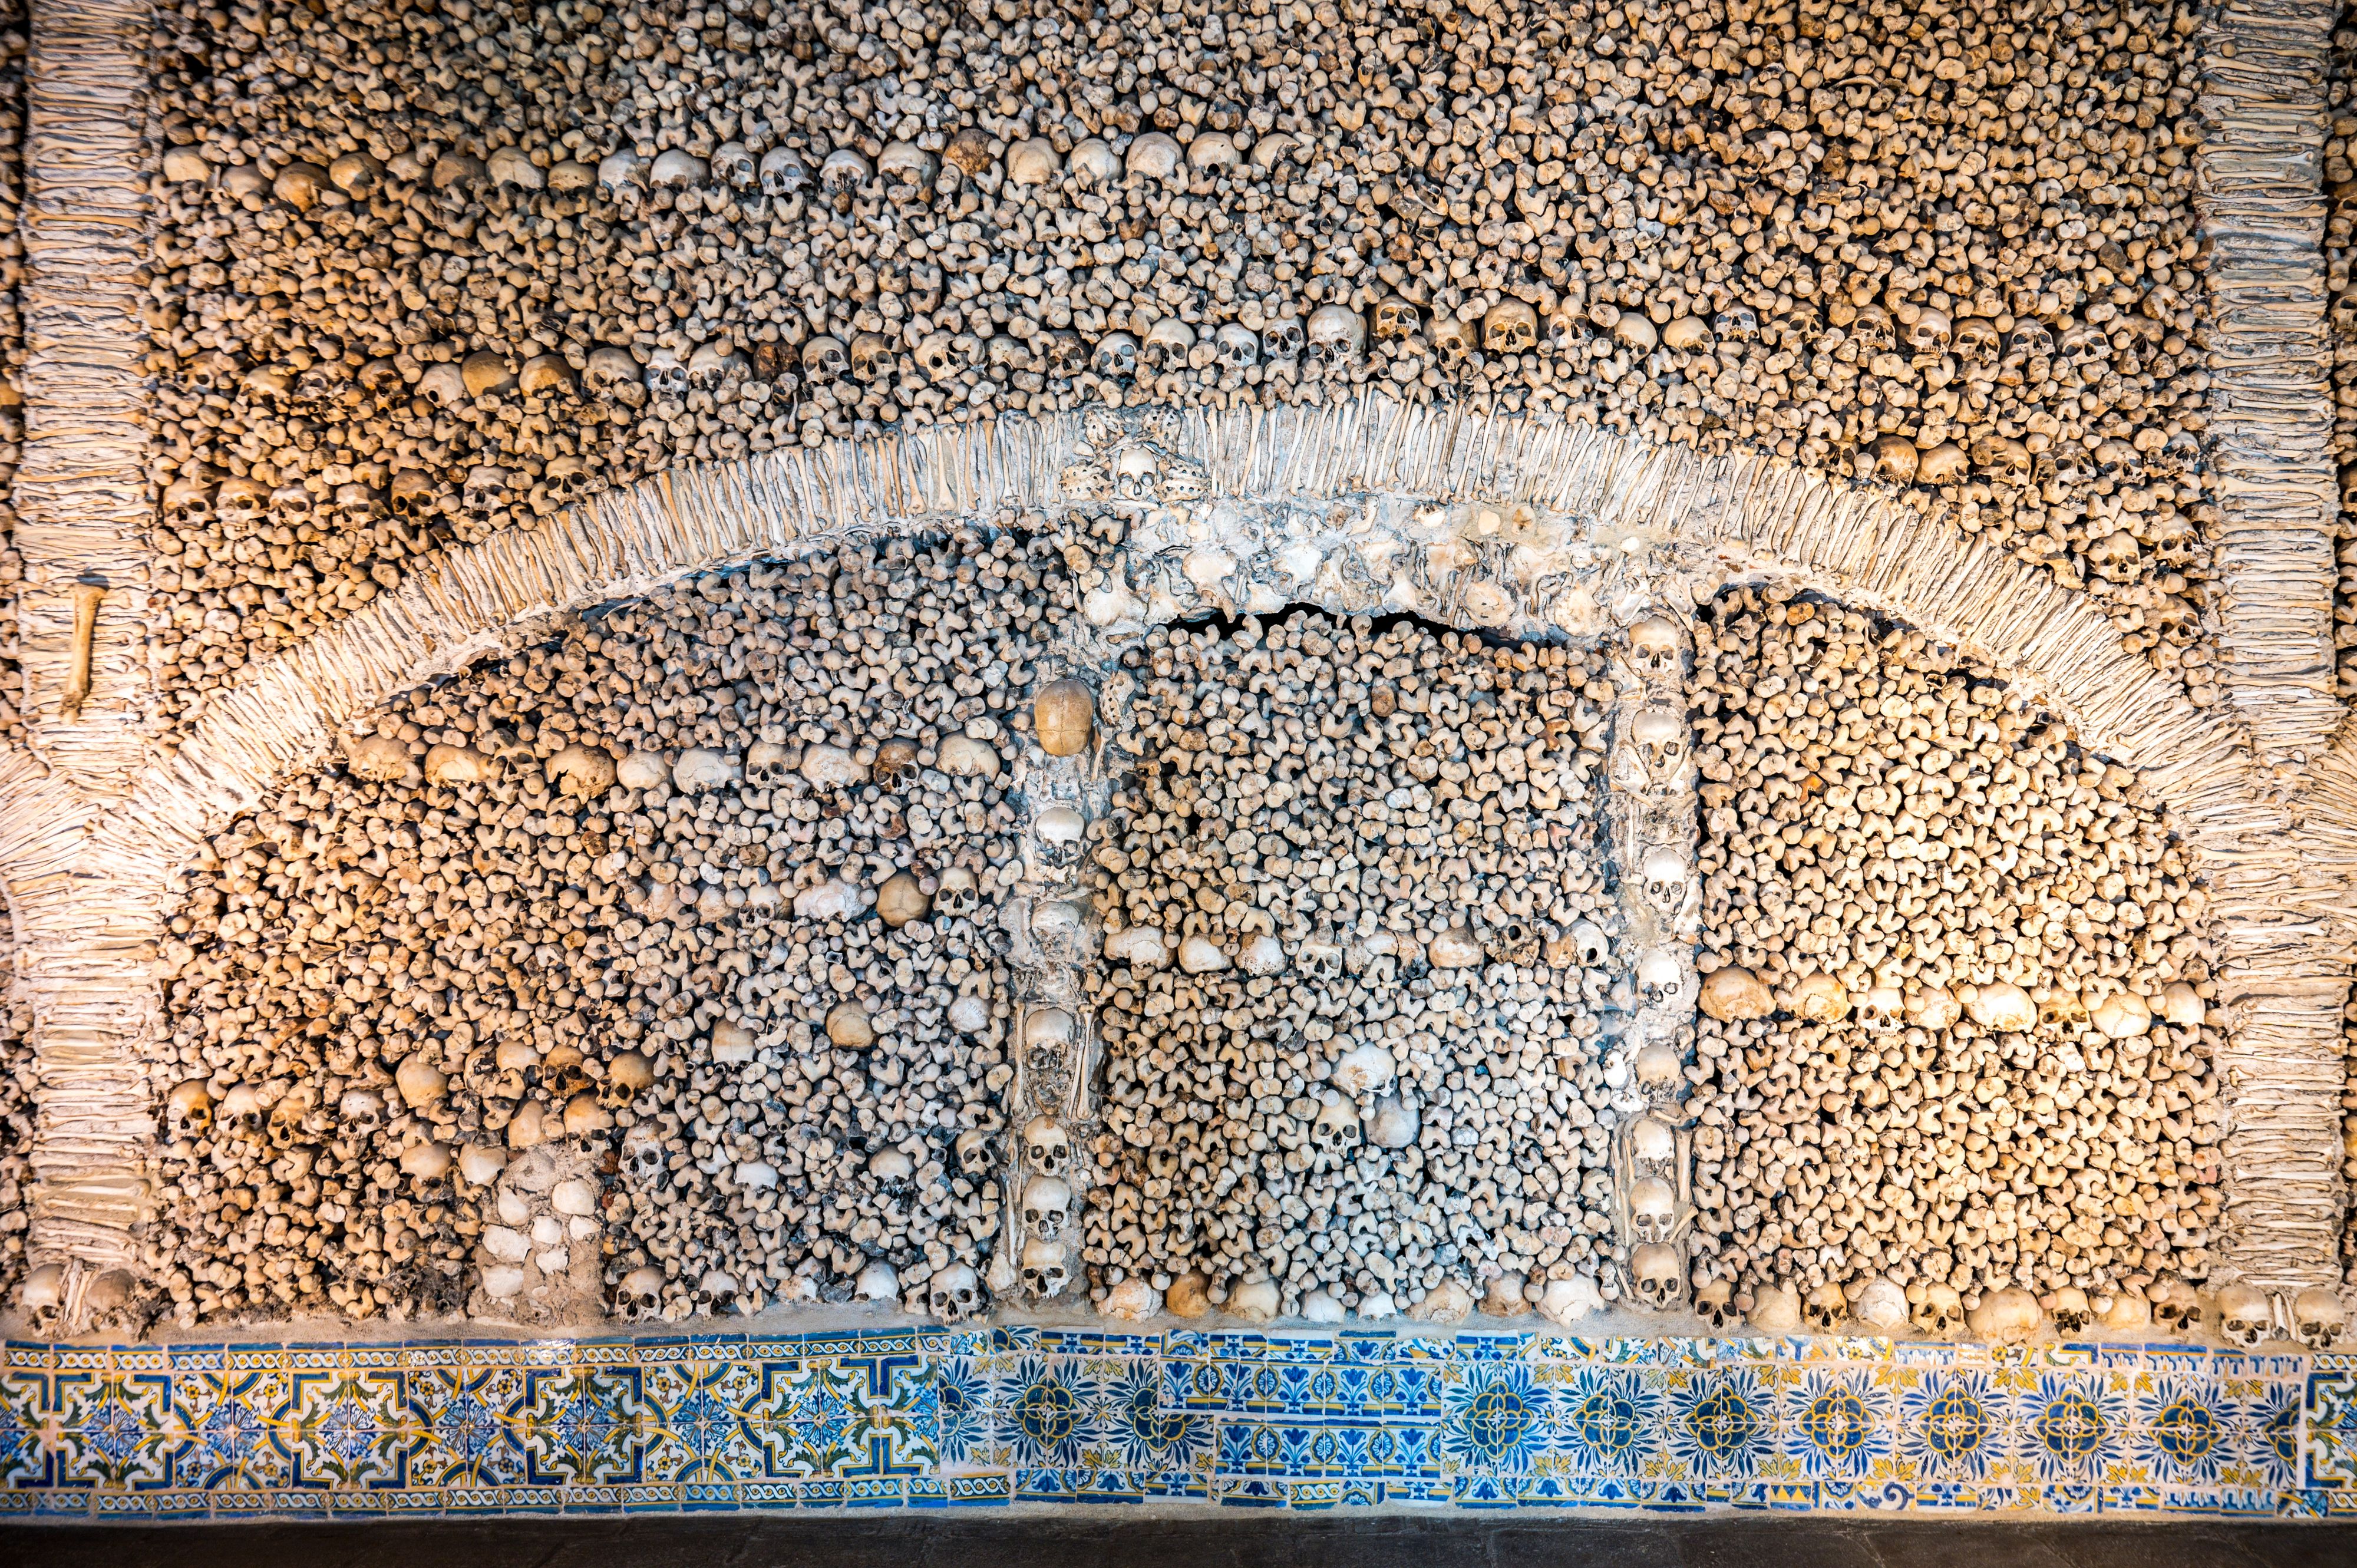 Skulls bones and blue tiles in Portugal catacombs